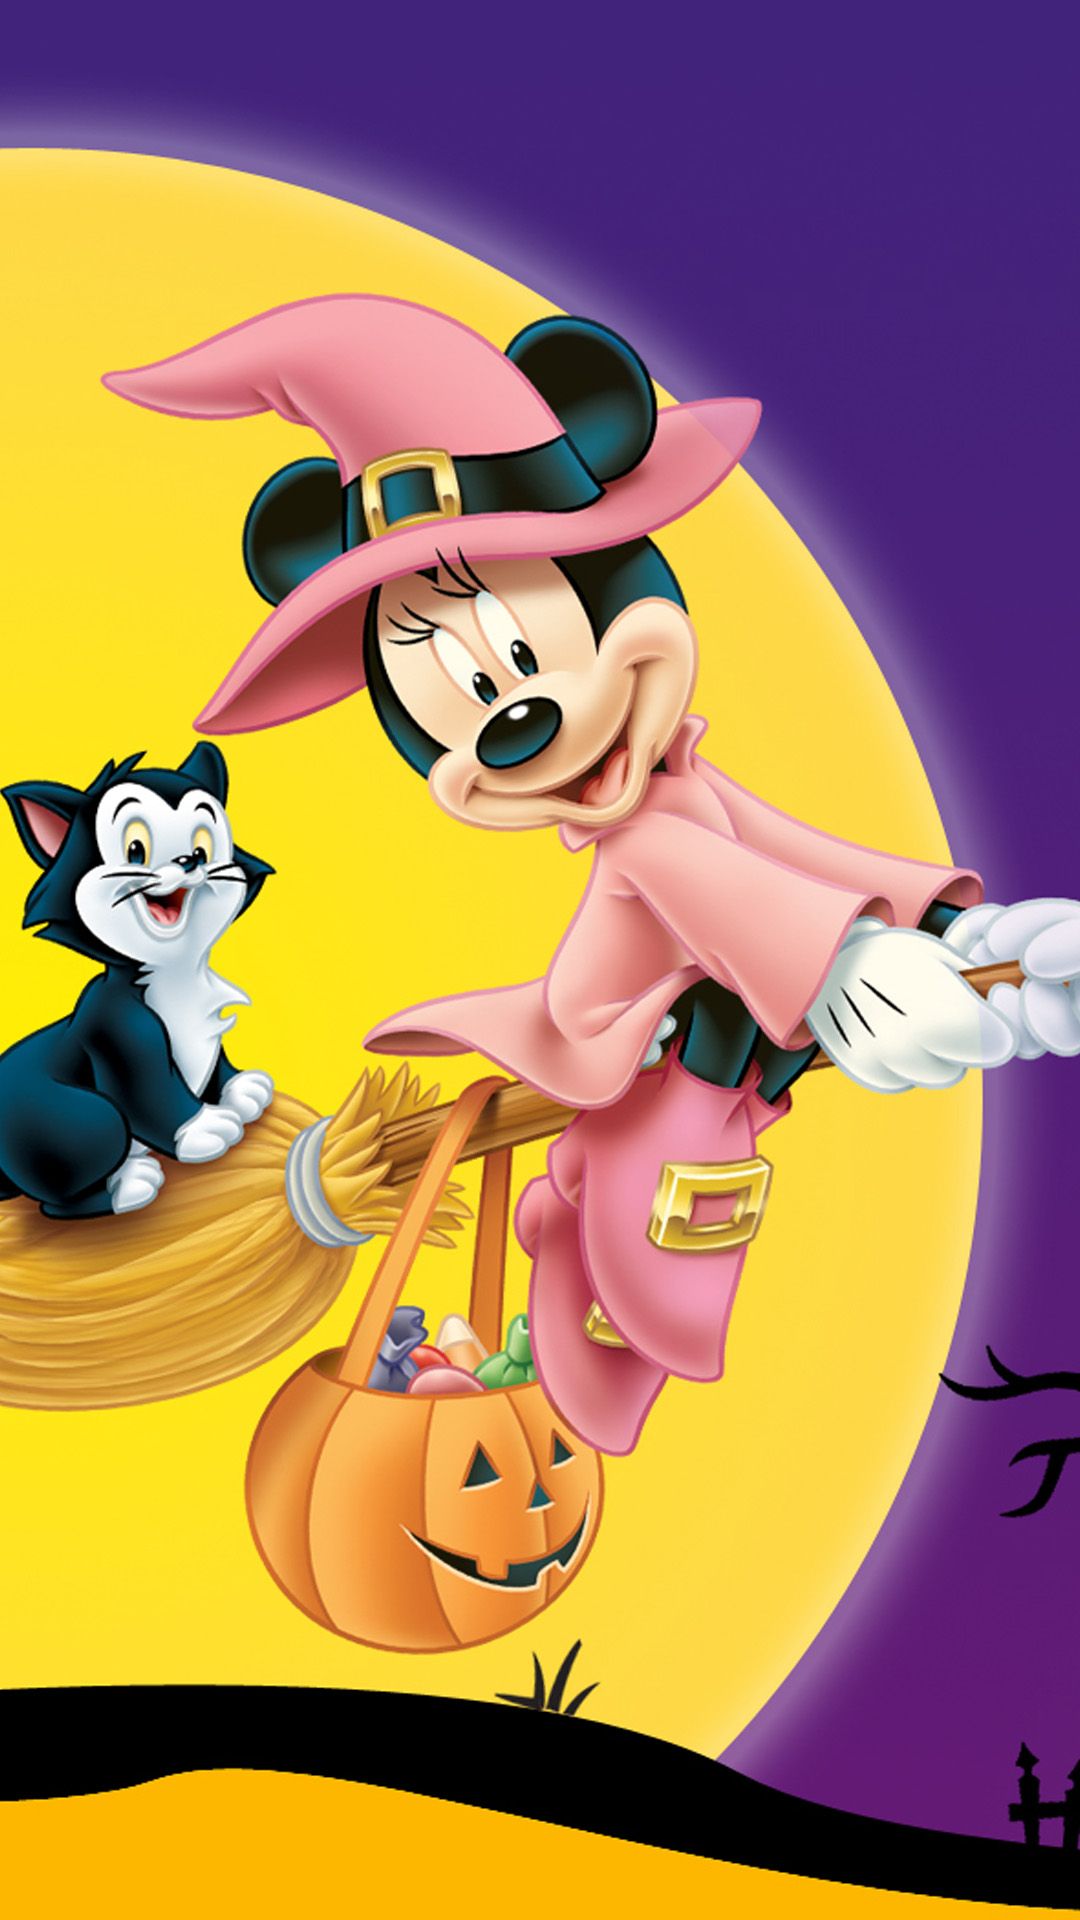 Disney Halloween wallpaper by Colt91  Download on ZEDGE  ed7e